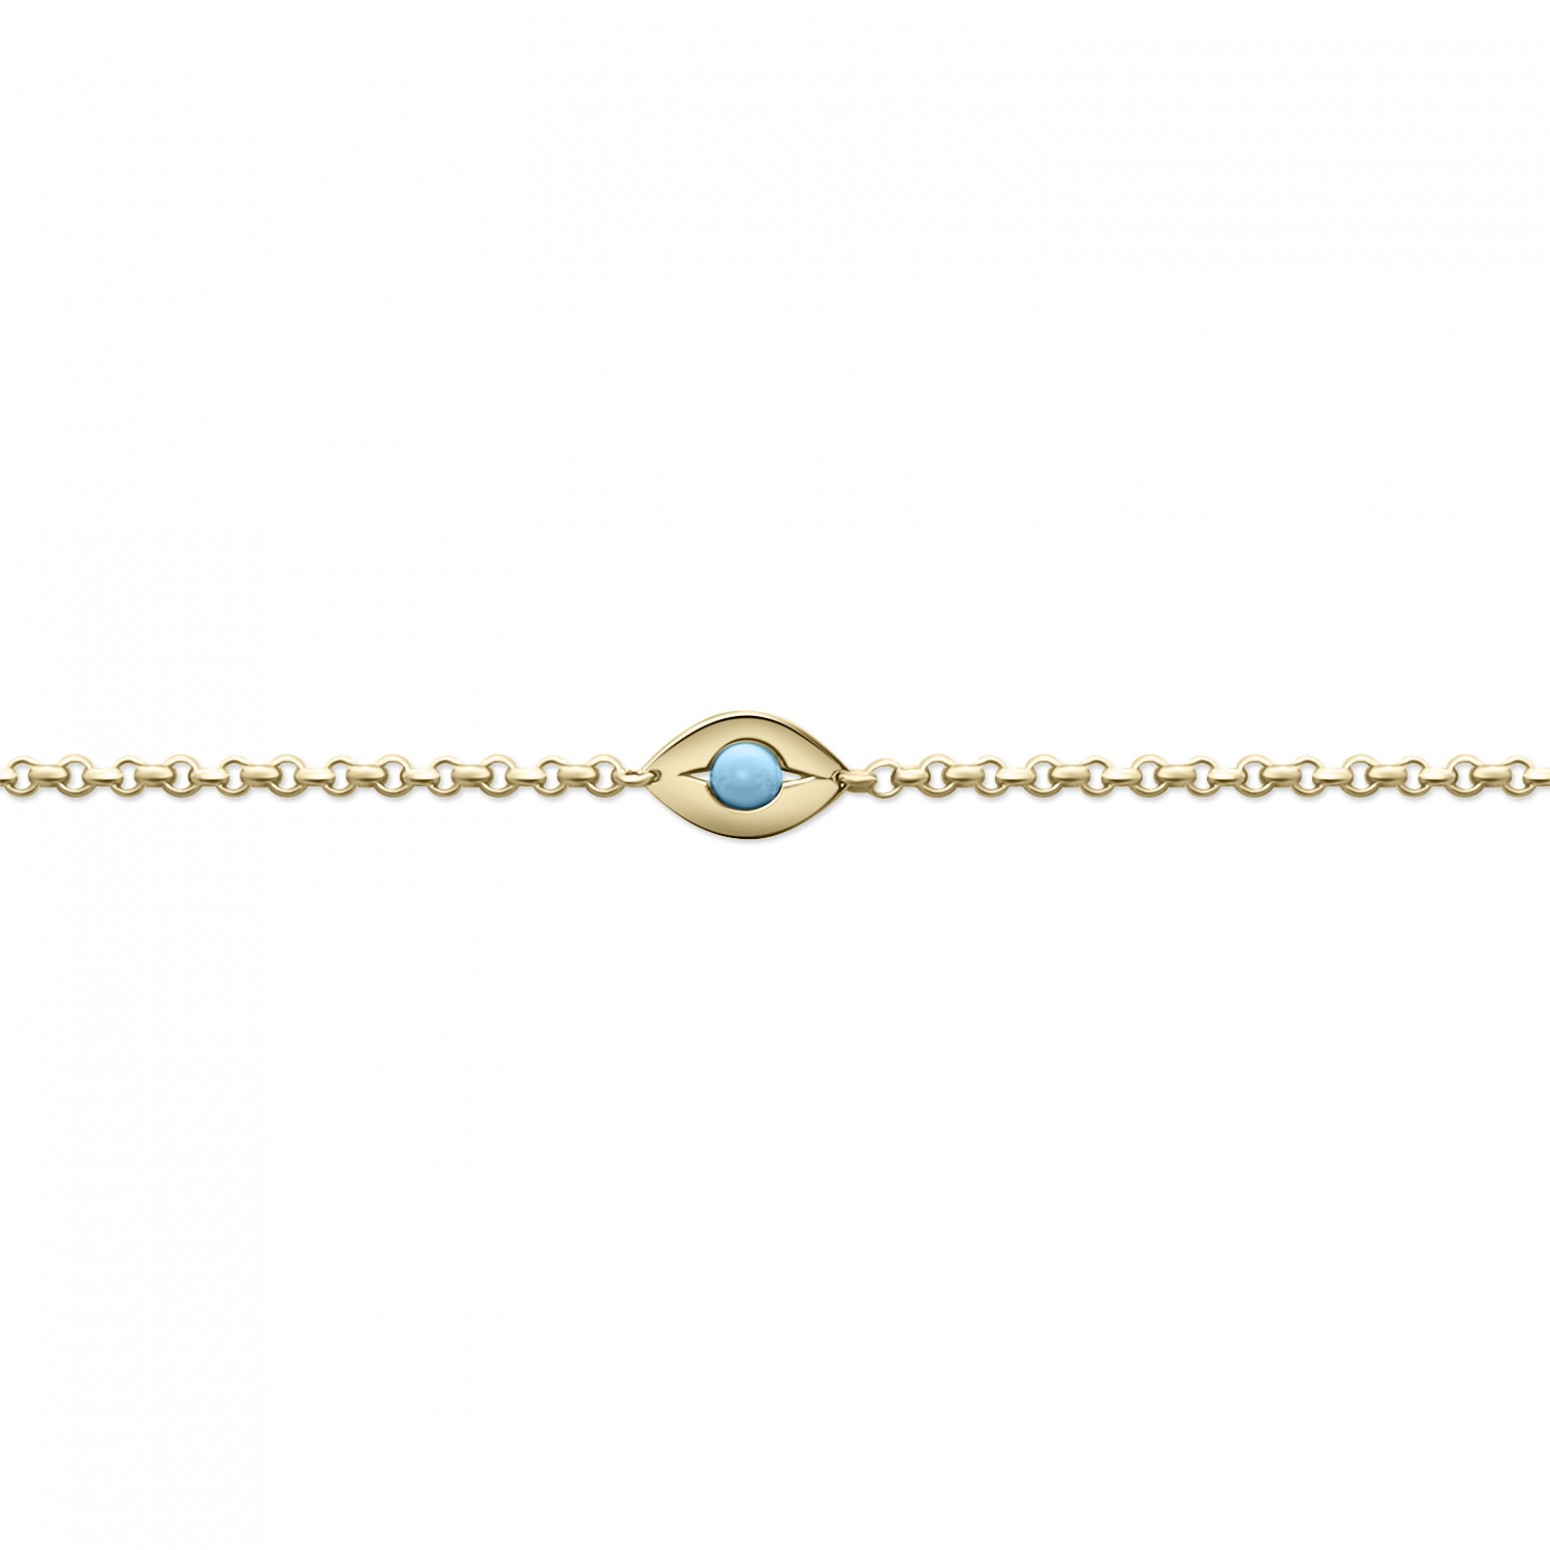 Babies bracelet K14 gold with eye and turquoise pb0335 BRACELETS Κοσμηματα - chrilia.gr